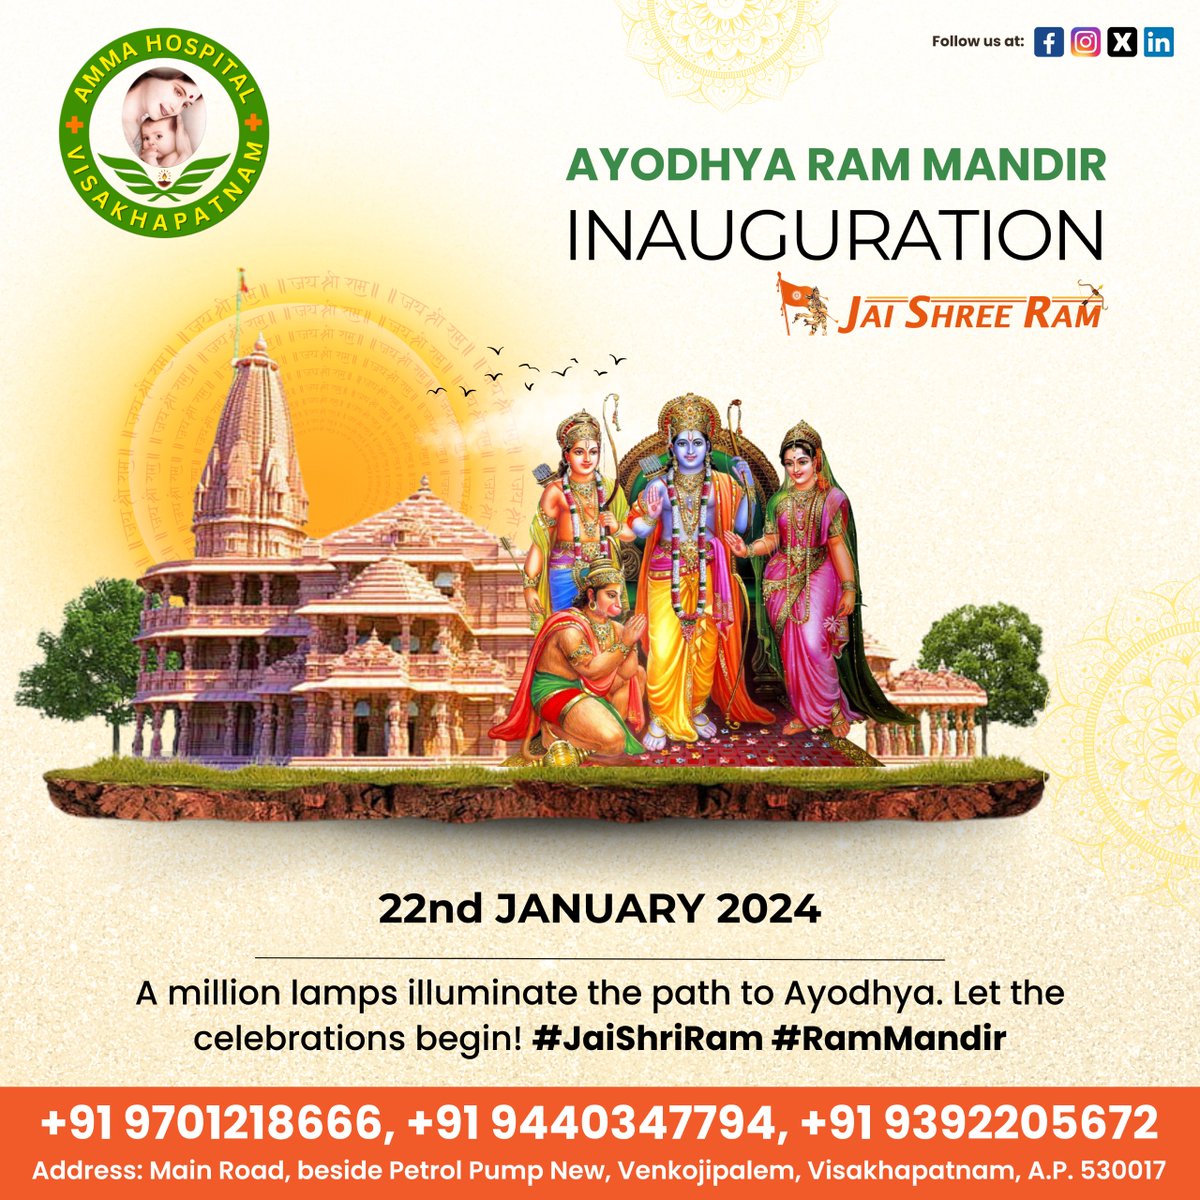 Amma Hospital celebrates the historic inauguration of Ayodhya Ram Mandir, a testament to unity and faith.

Consult Now : +91 9515888591 | +91 9392051992

#JaiShriRam #AyodhyaRamMandir #UnityInFaith #AmmaHospitalCelebrates #HarmonyAndHealing #InaugurationJoy #RamMandirInauguration